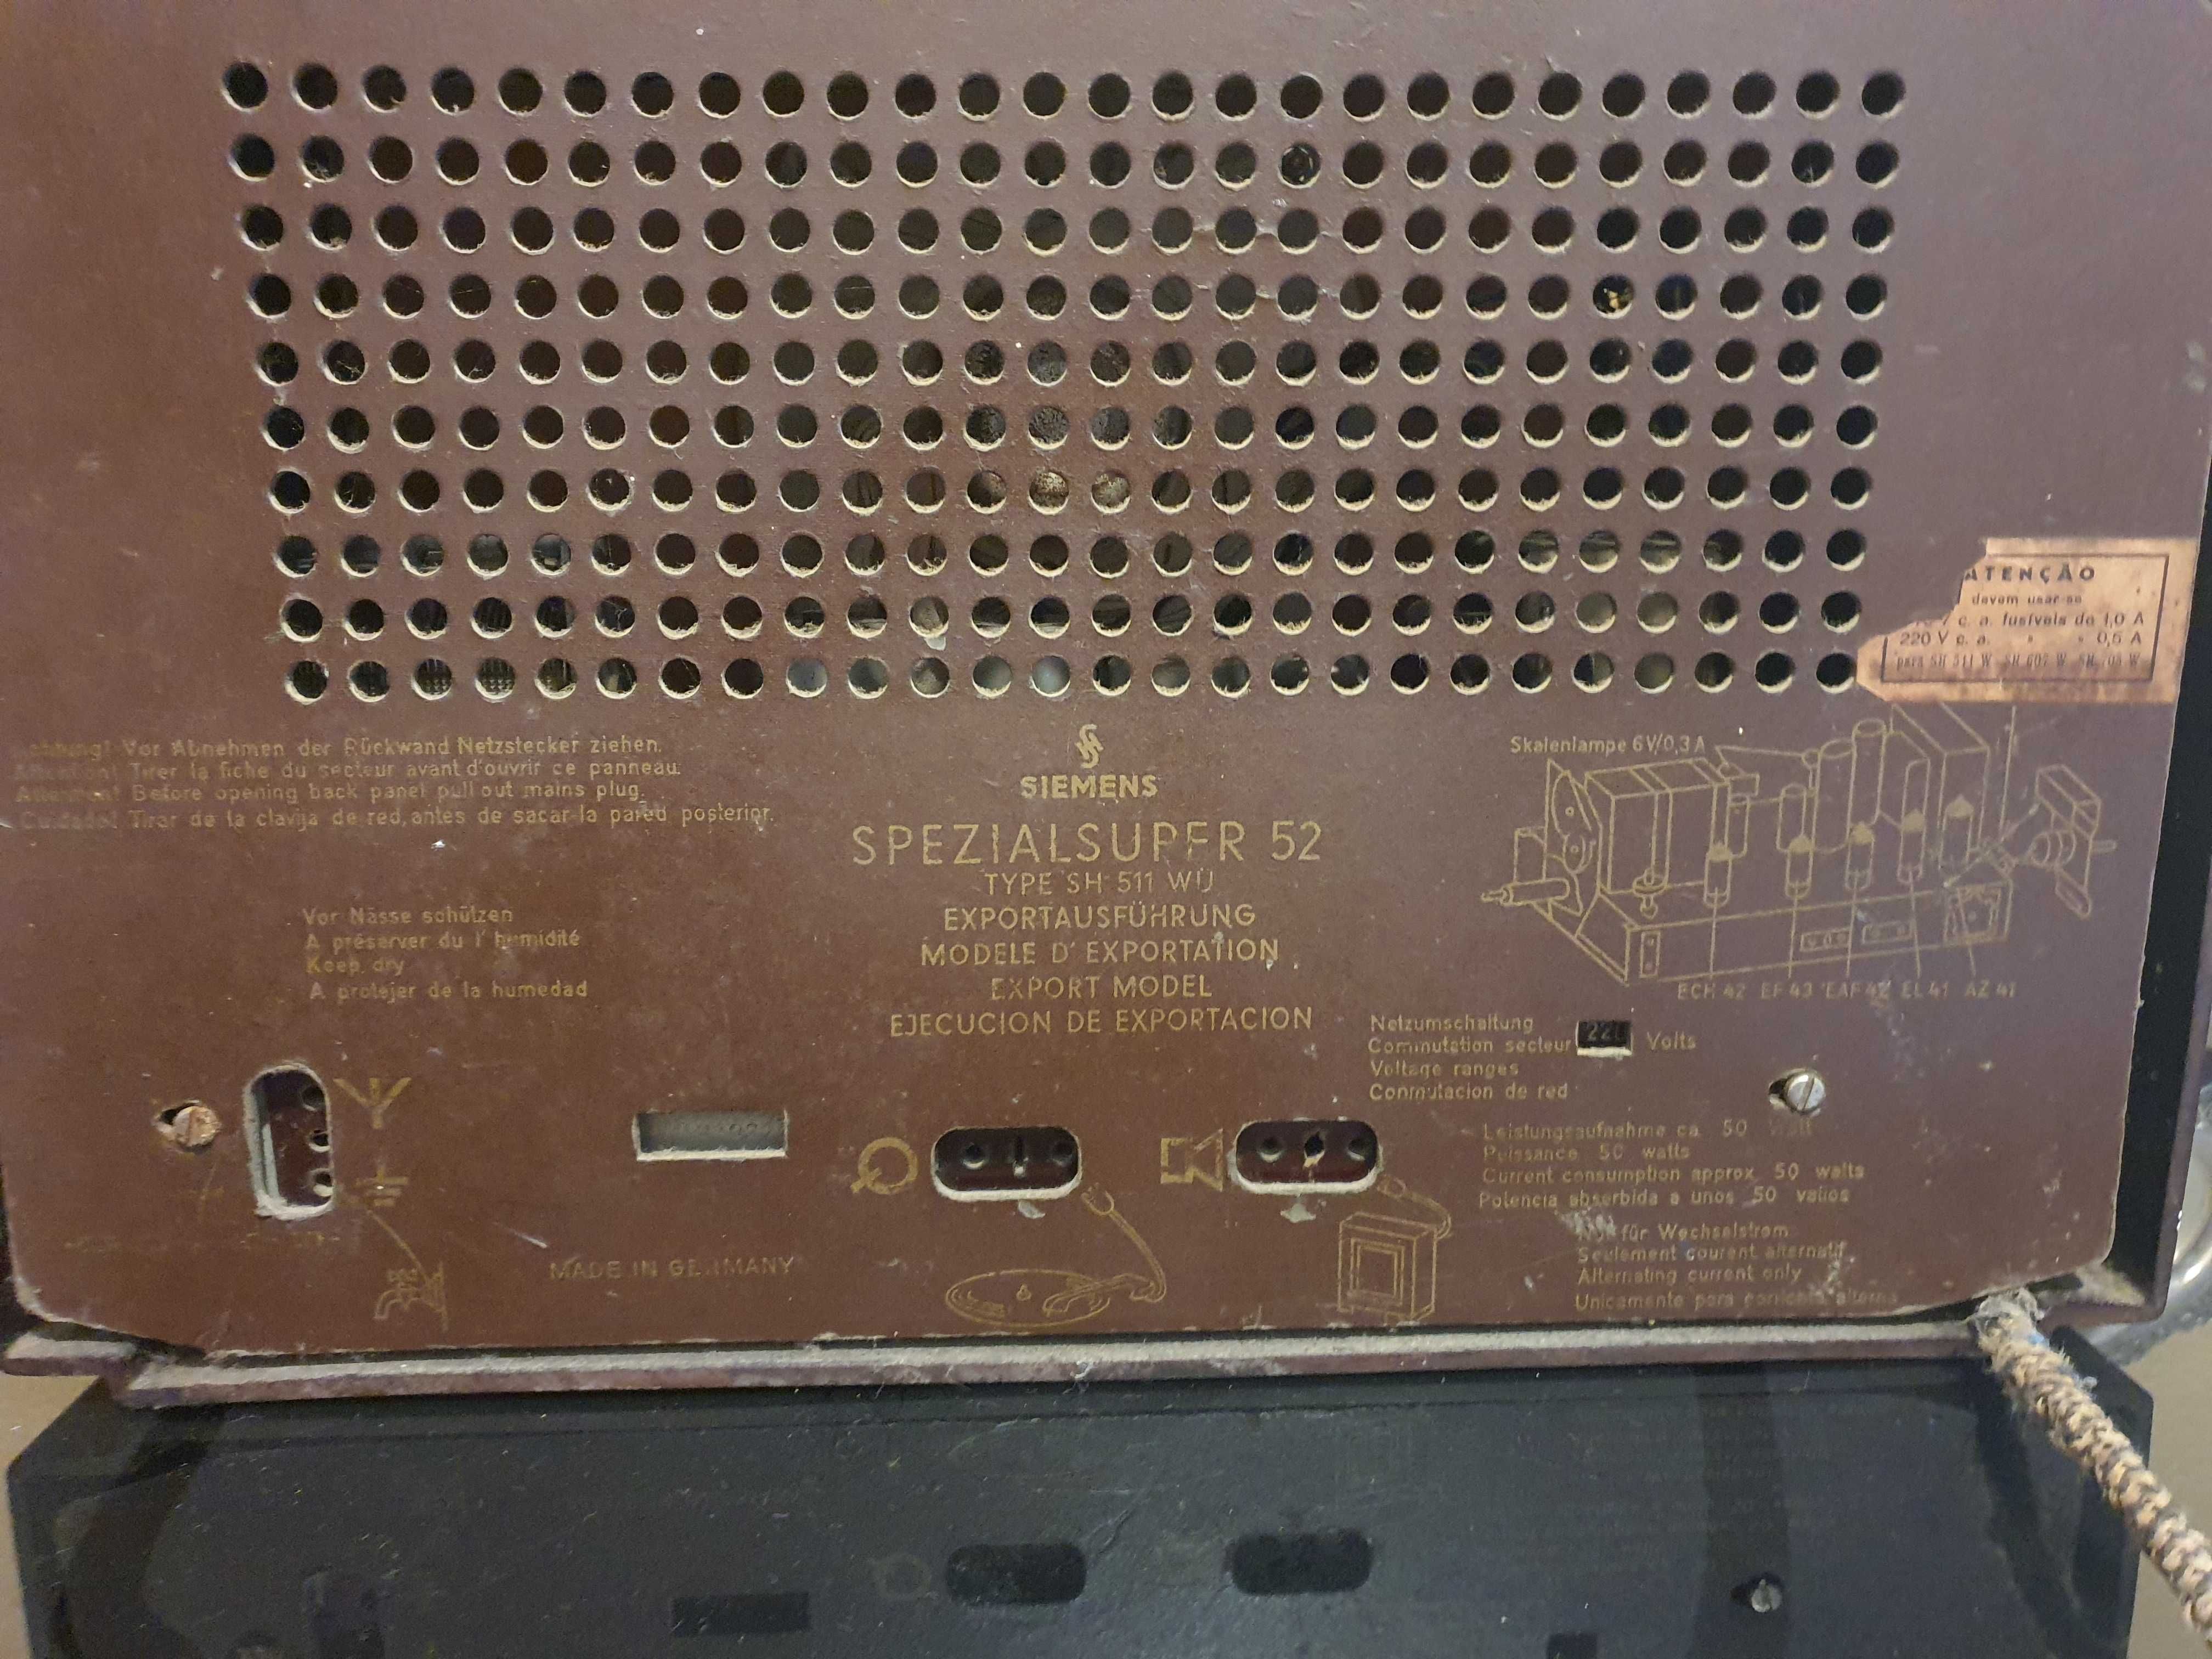 Radio vintage Siemens do ano 1950